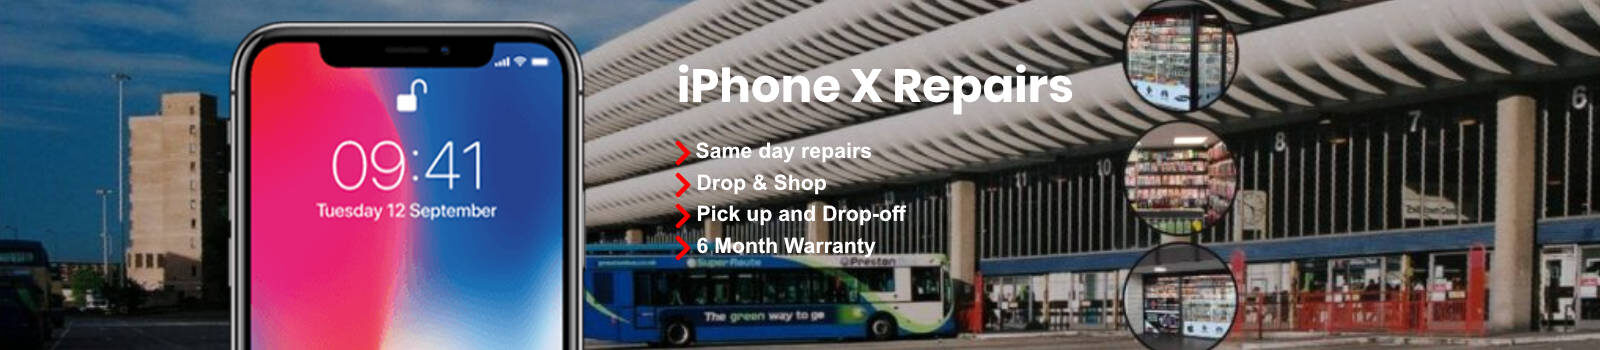 Iphone X Repairs